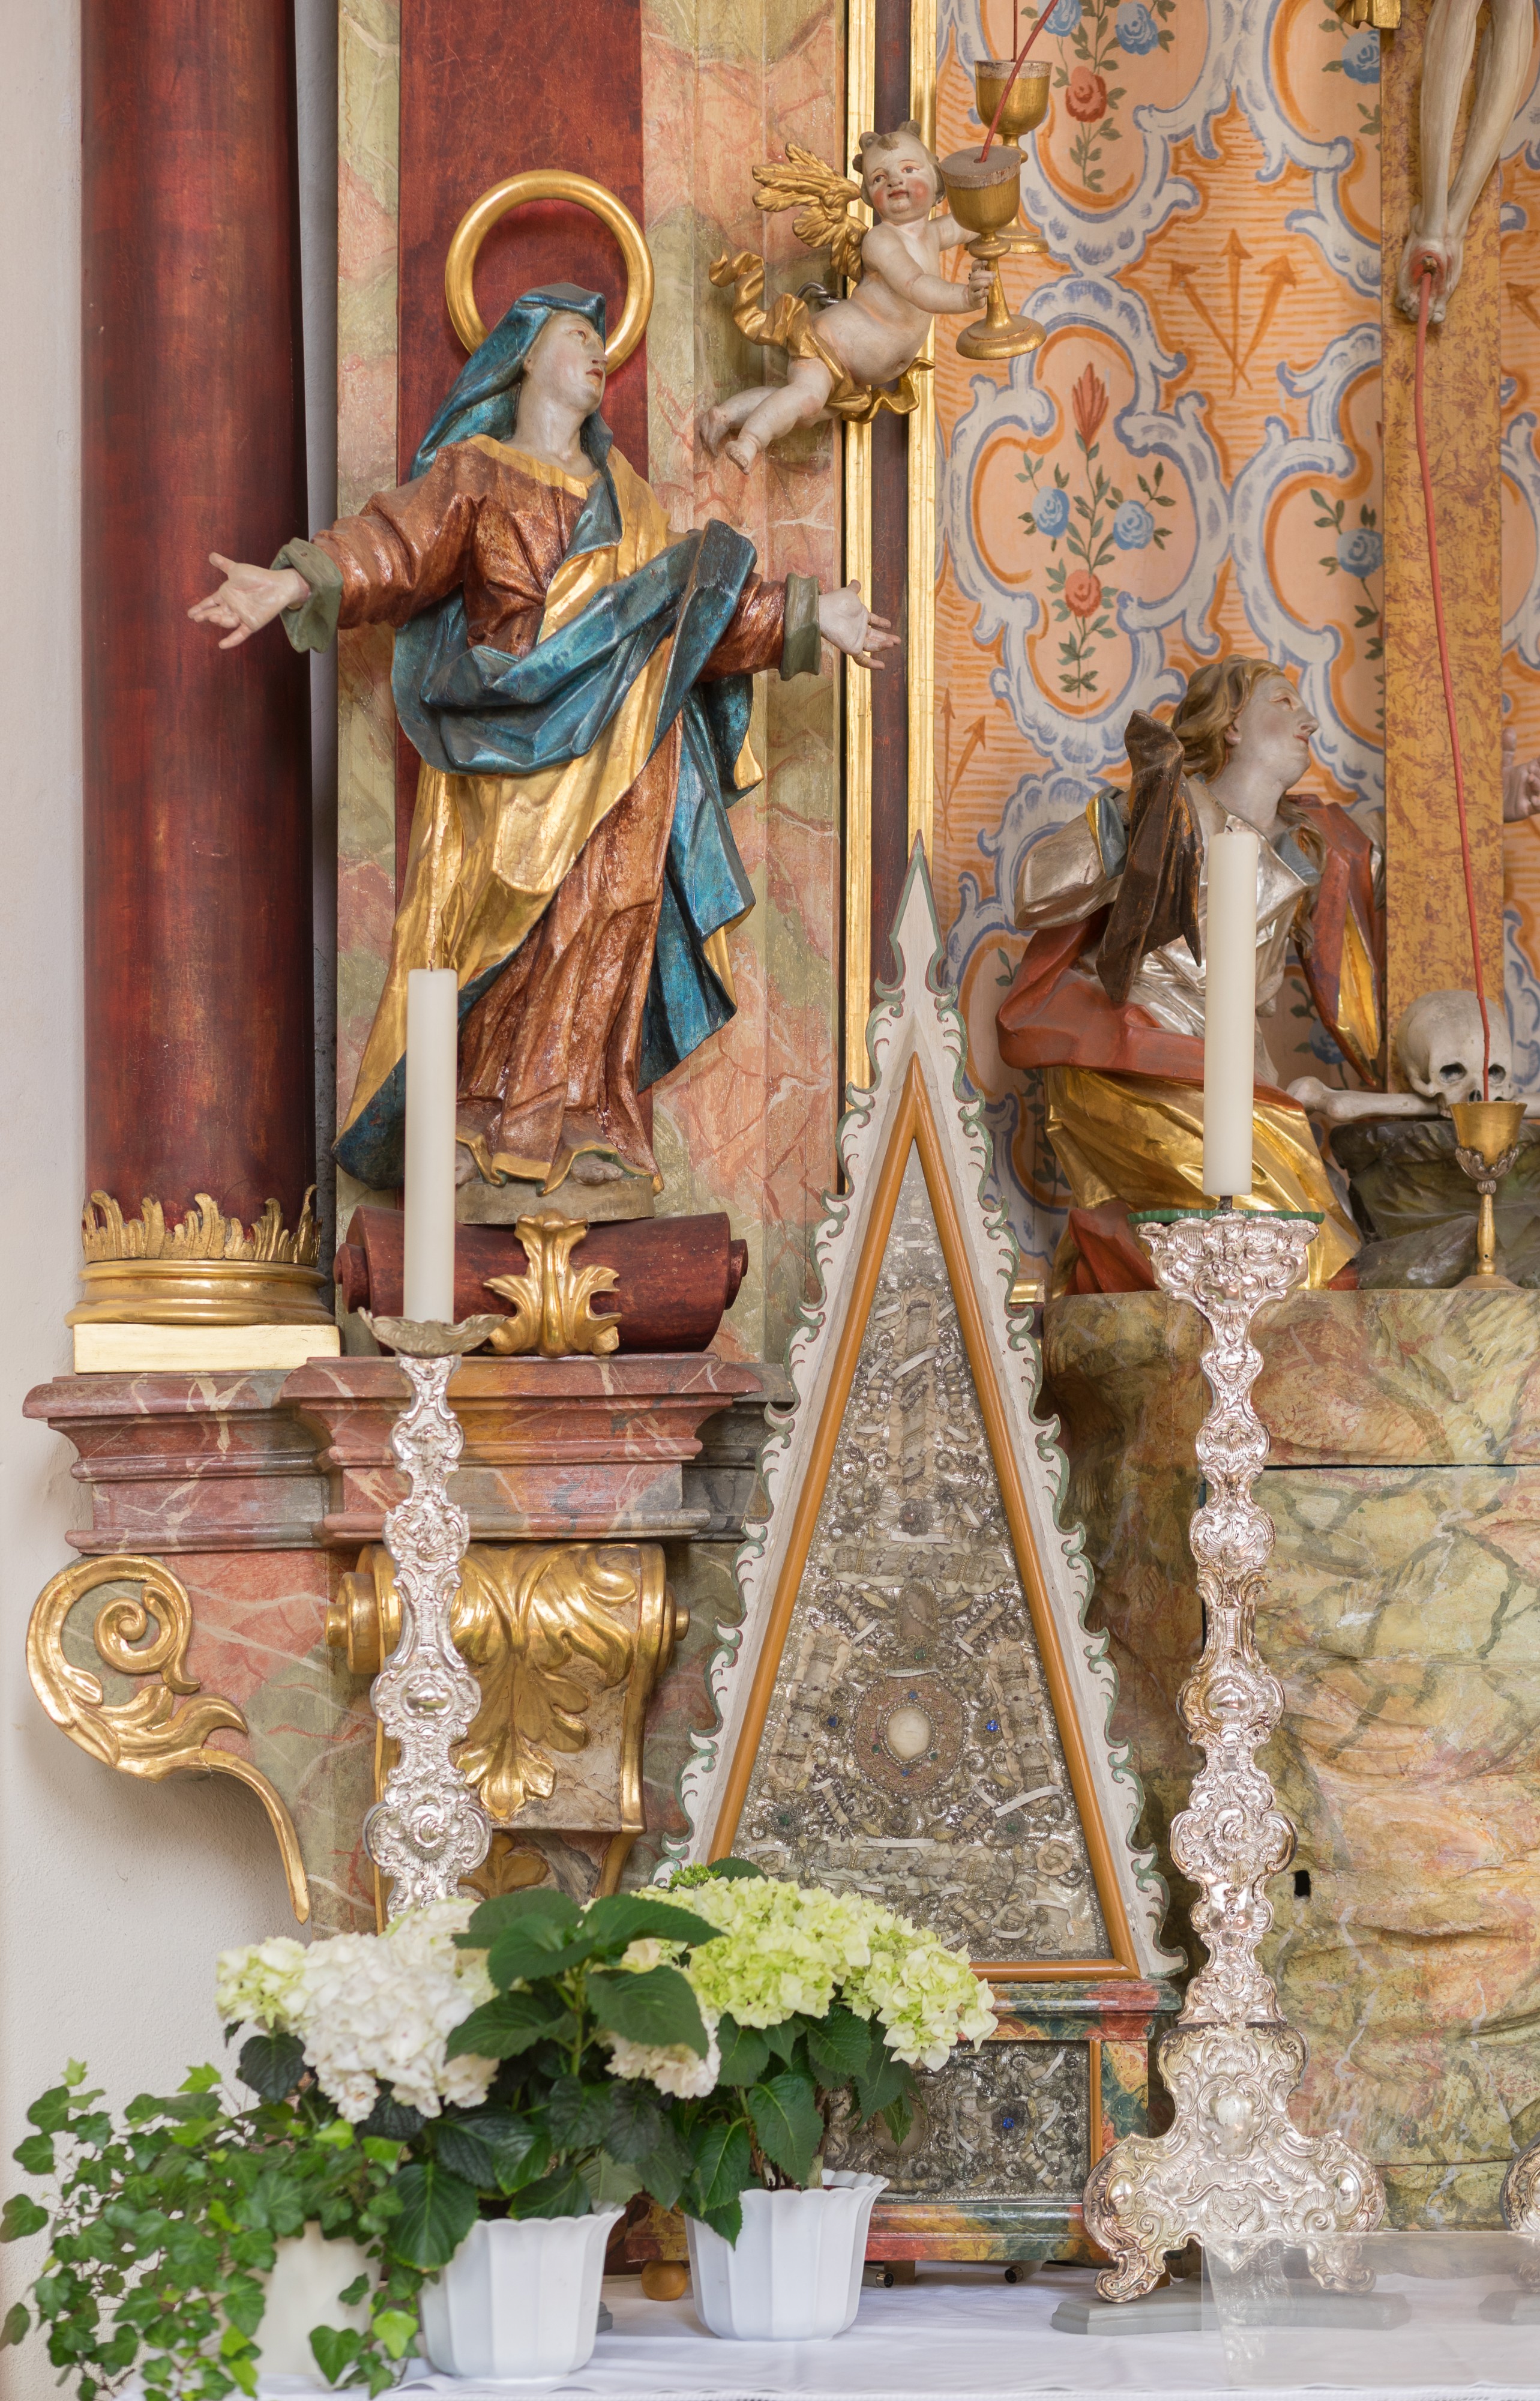 St. Simon und Judas Thaddäus (Holzgünz) - Details on the left altar